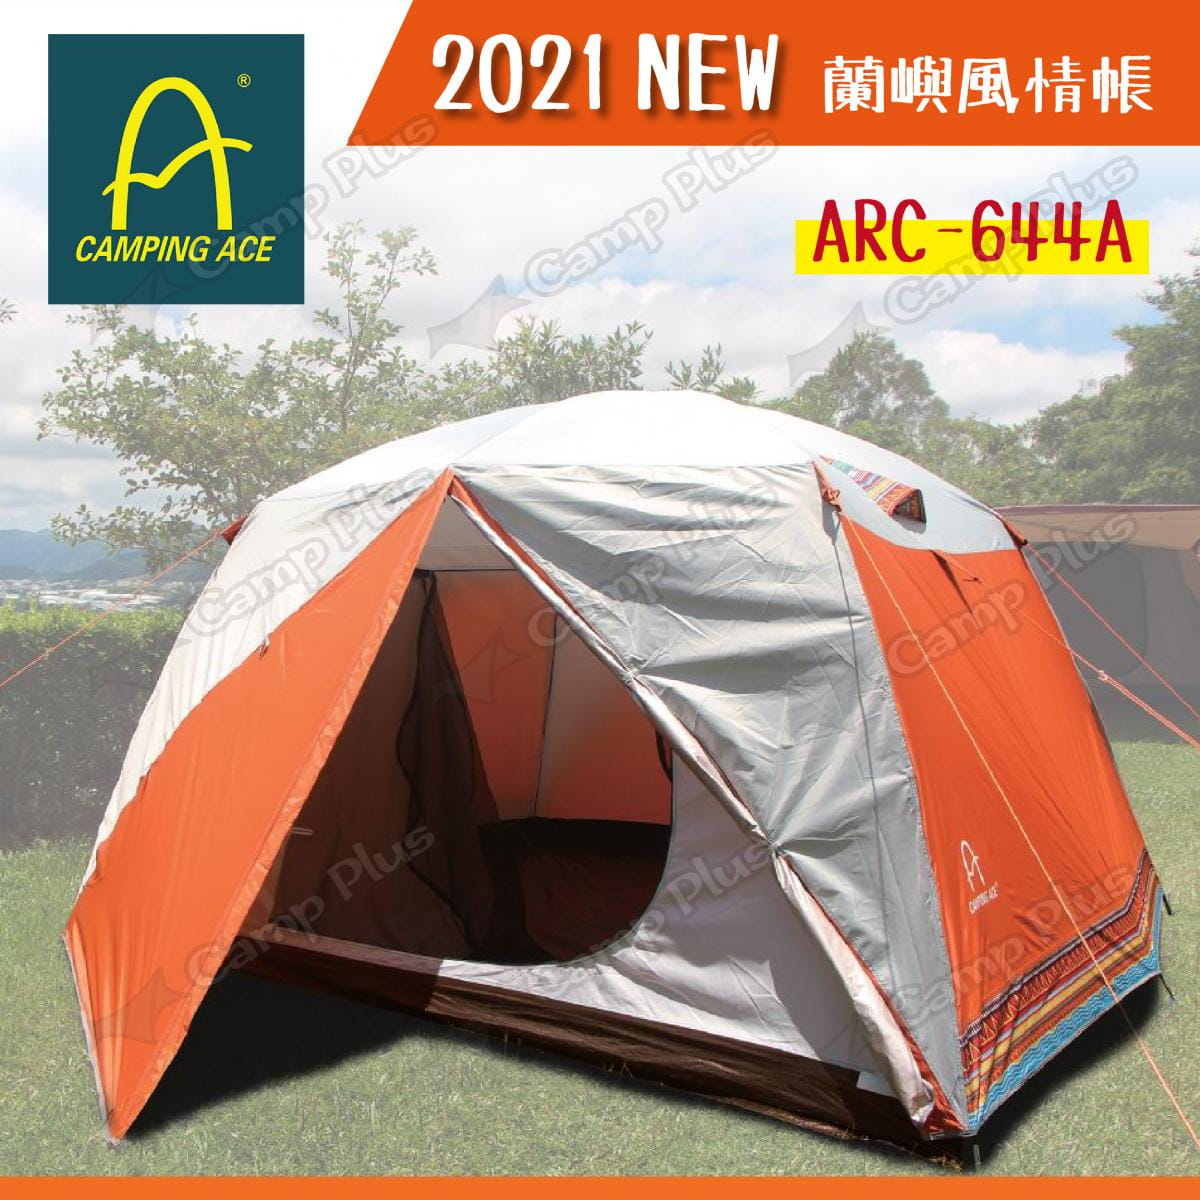 【Camping Ace野樂】蘭嶼風情帳_ARC-644A (悠遊戶外) 1